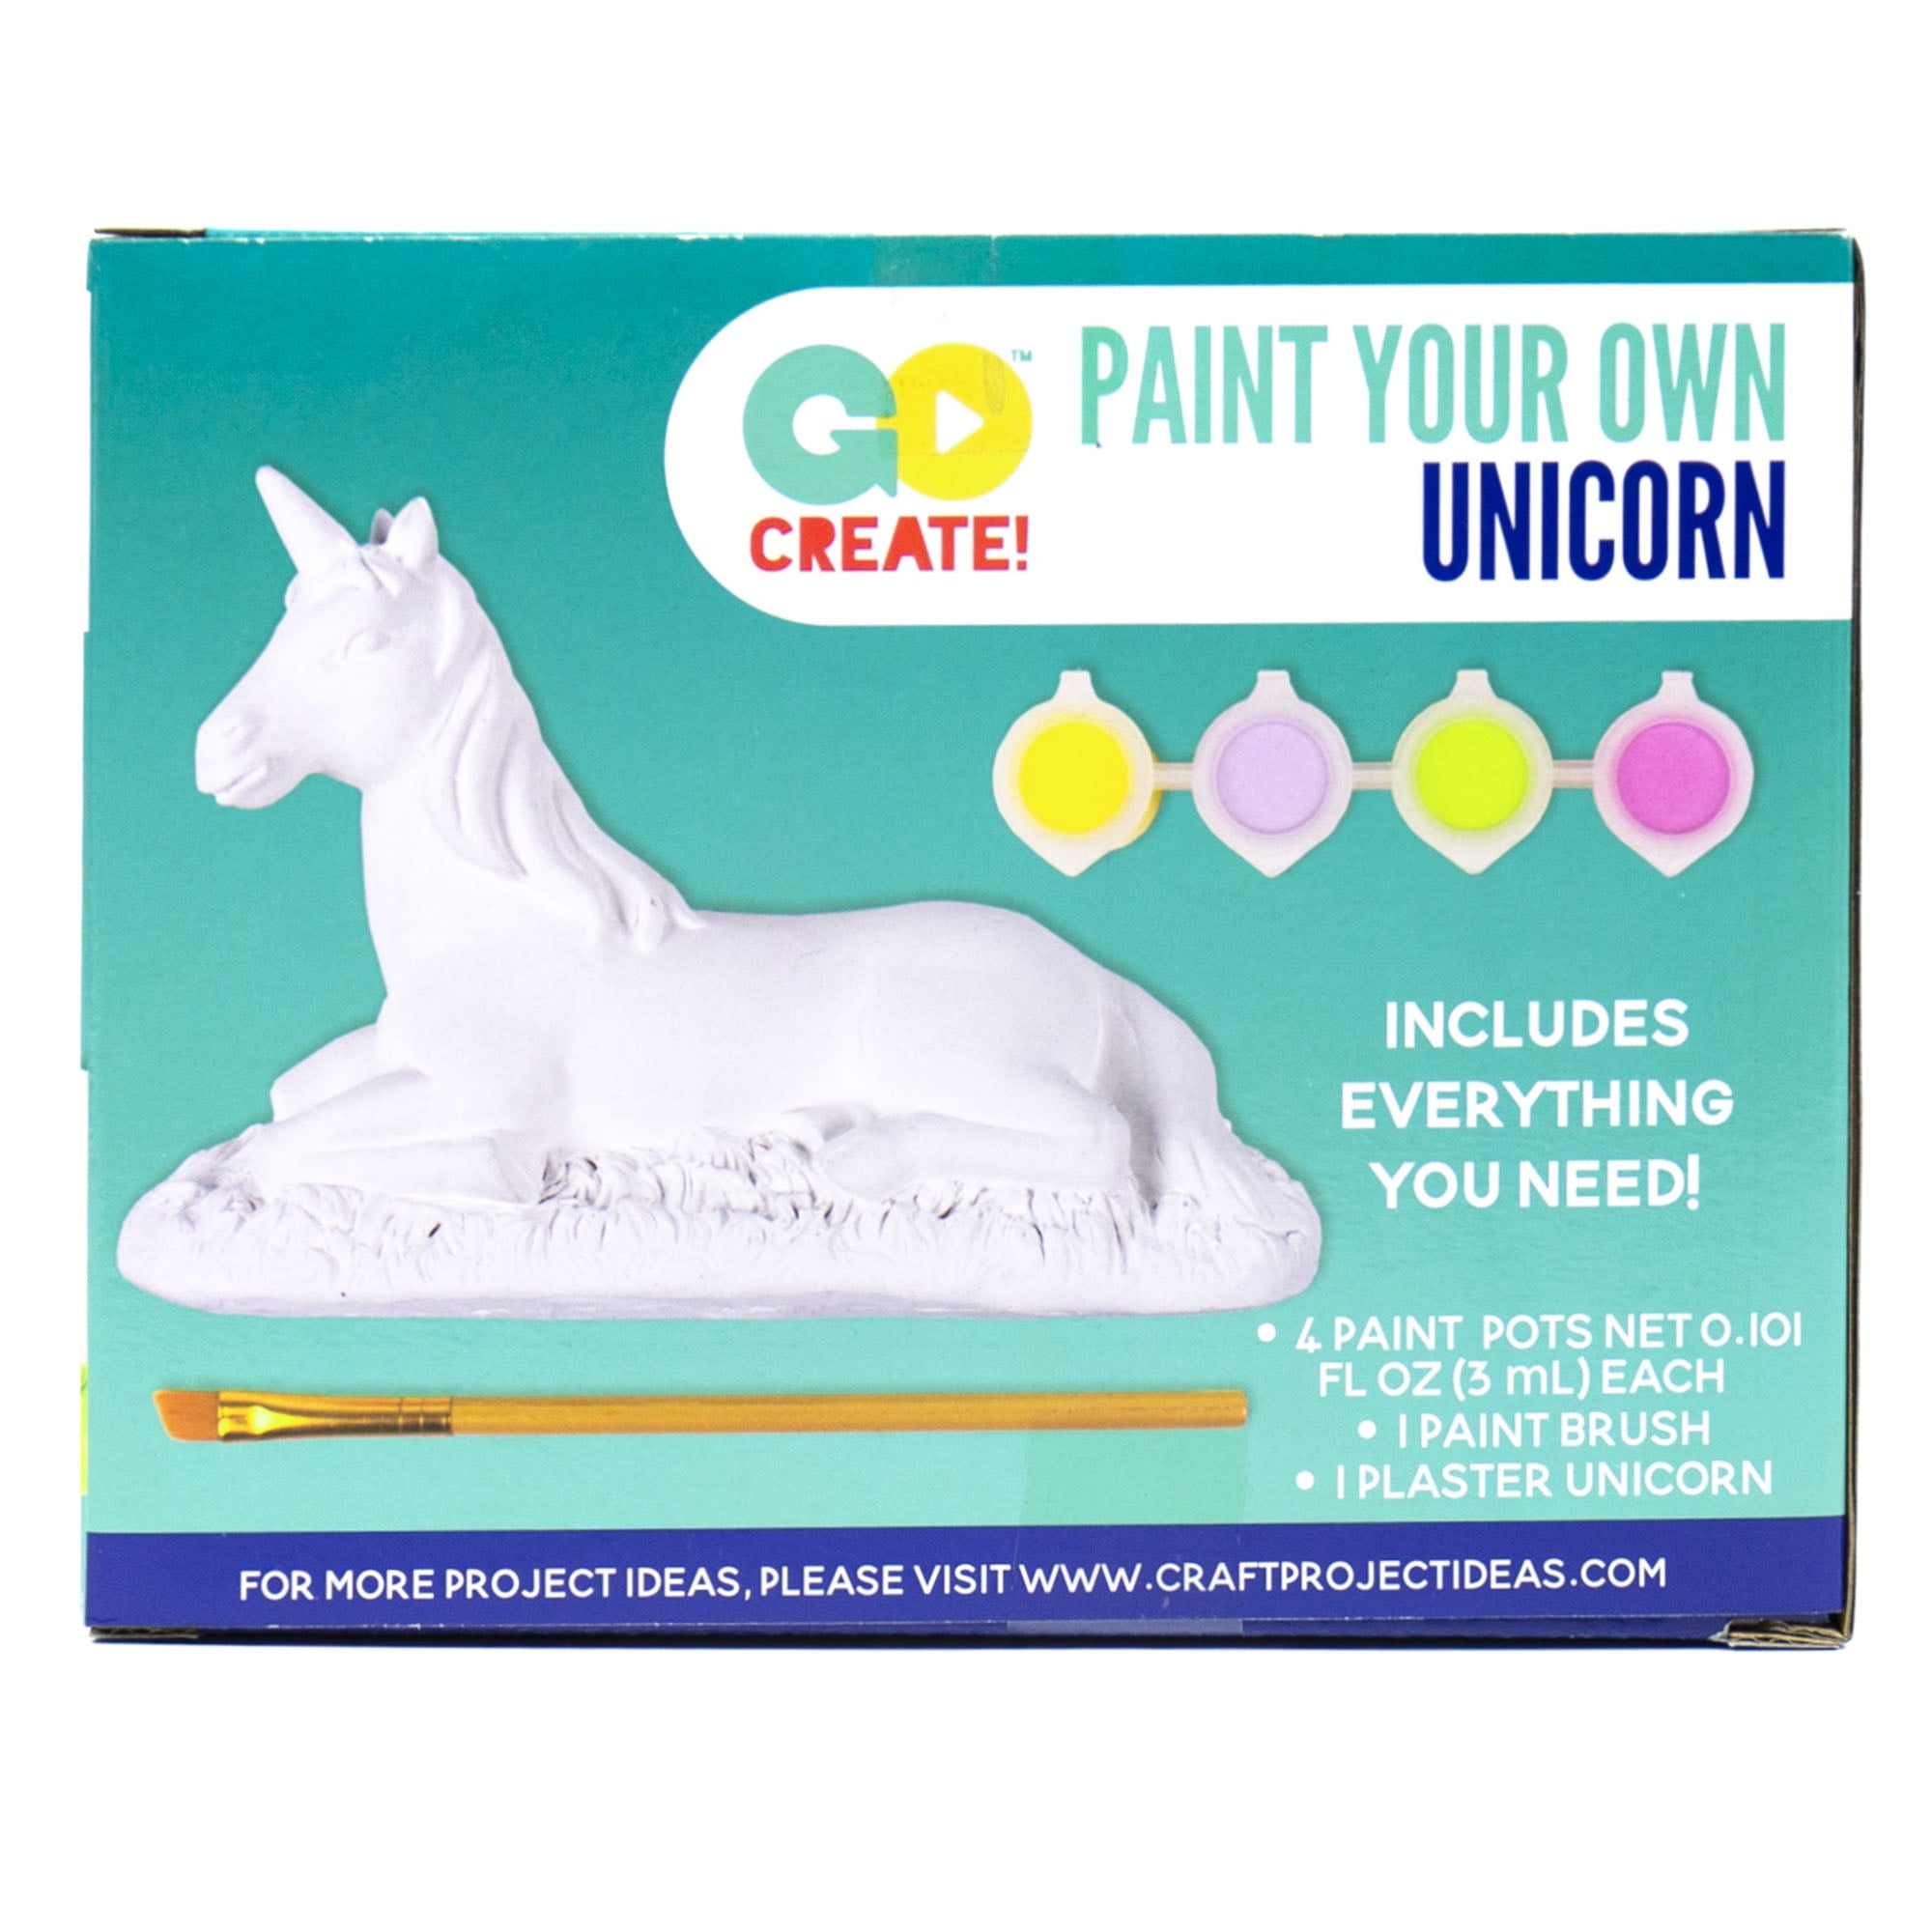  Golray Paint Your Own Unicorn Painting Kit Unicorn